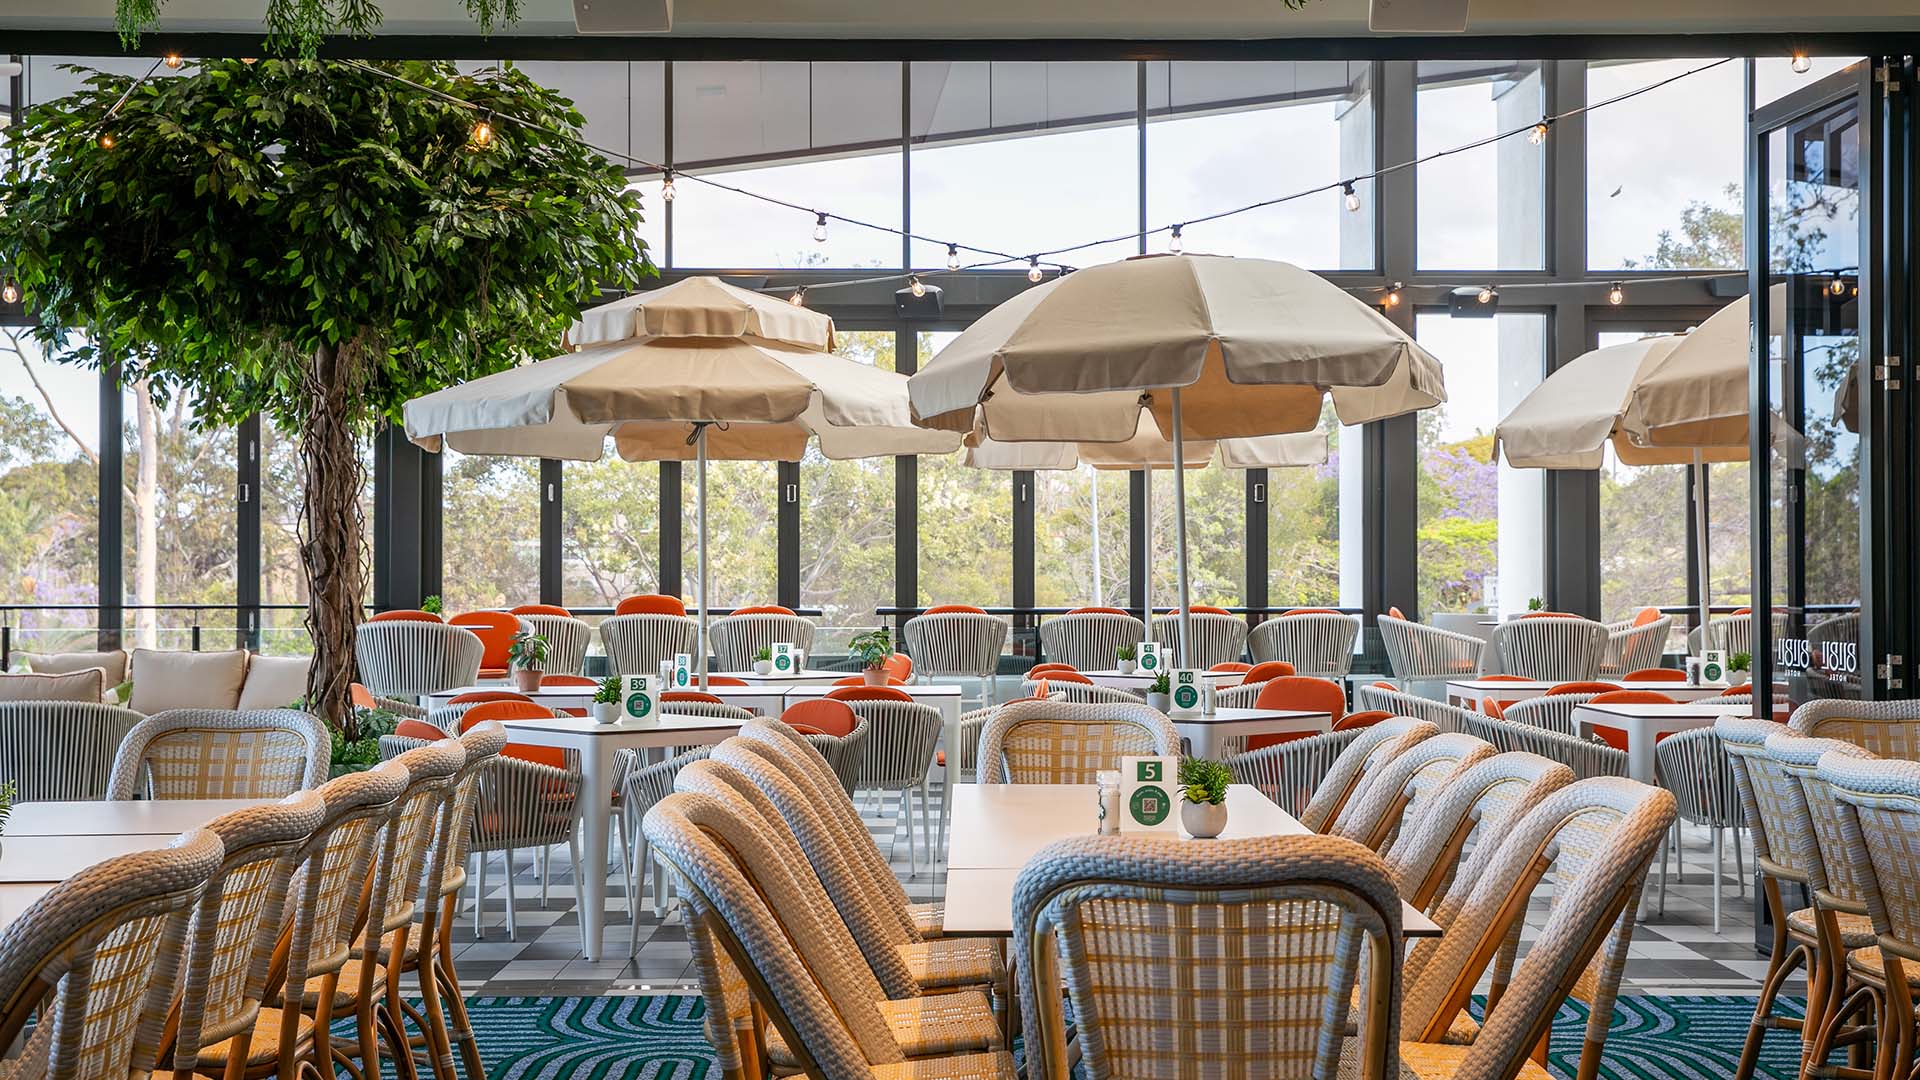 Now Open: Bli Bli Hotel's Mediterranean-Inspired Rooftop Terrace Is Your New Sunshine Coast Drinks Spot